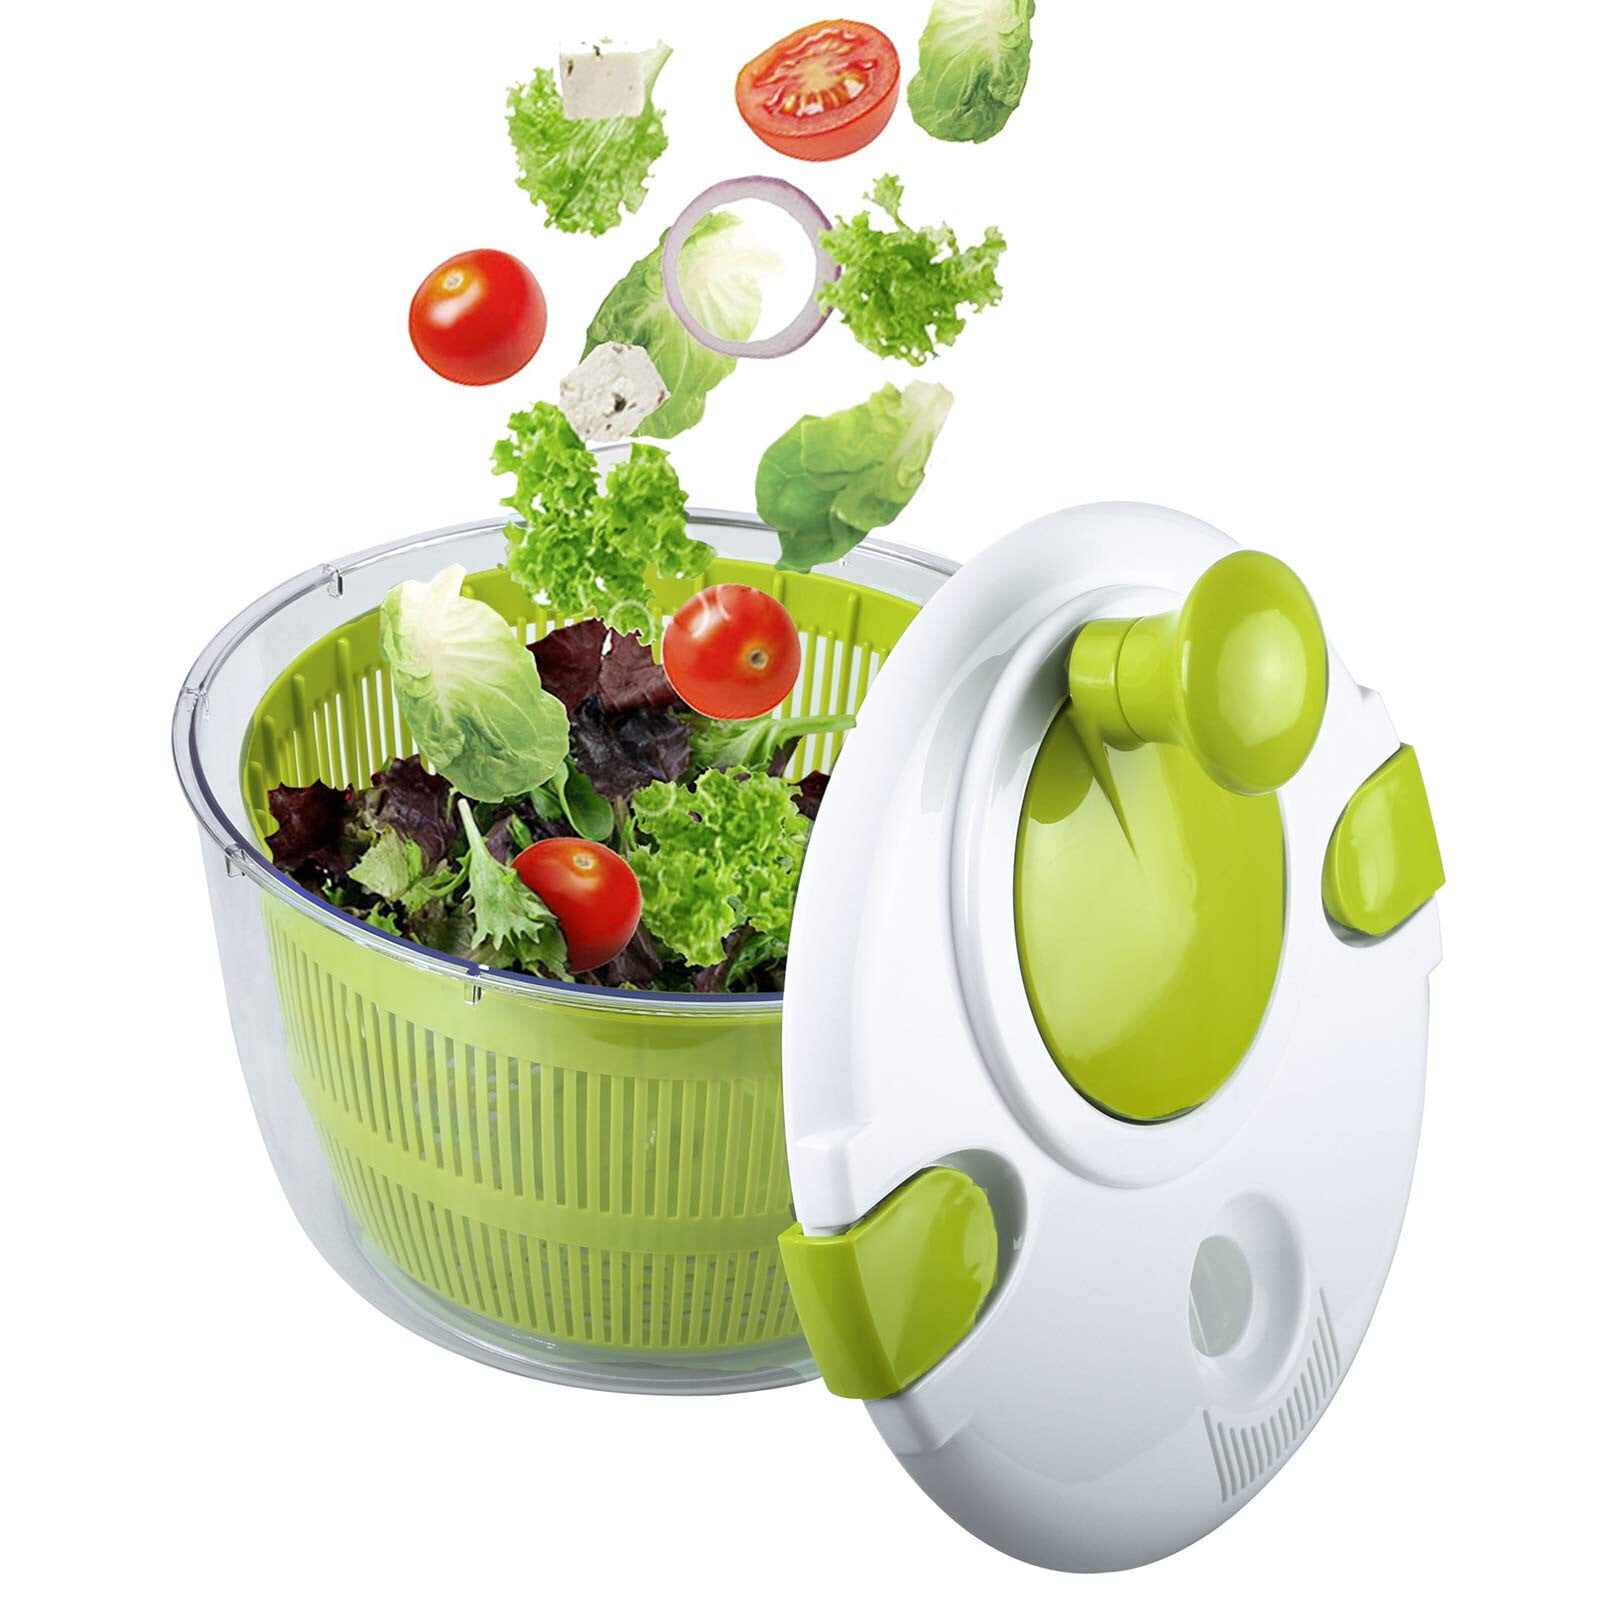 UMIKAkitchen Capacity 3L Salad Spinner Vegetable Washer Fruit Veggie Bowl  Collapsible Salad Spinner with Lid Veggie Dryer Set for Kitchen Tools of